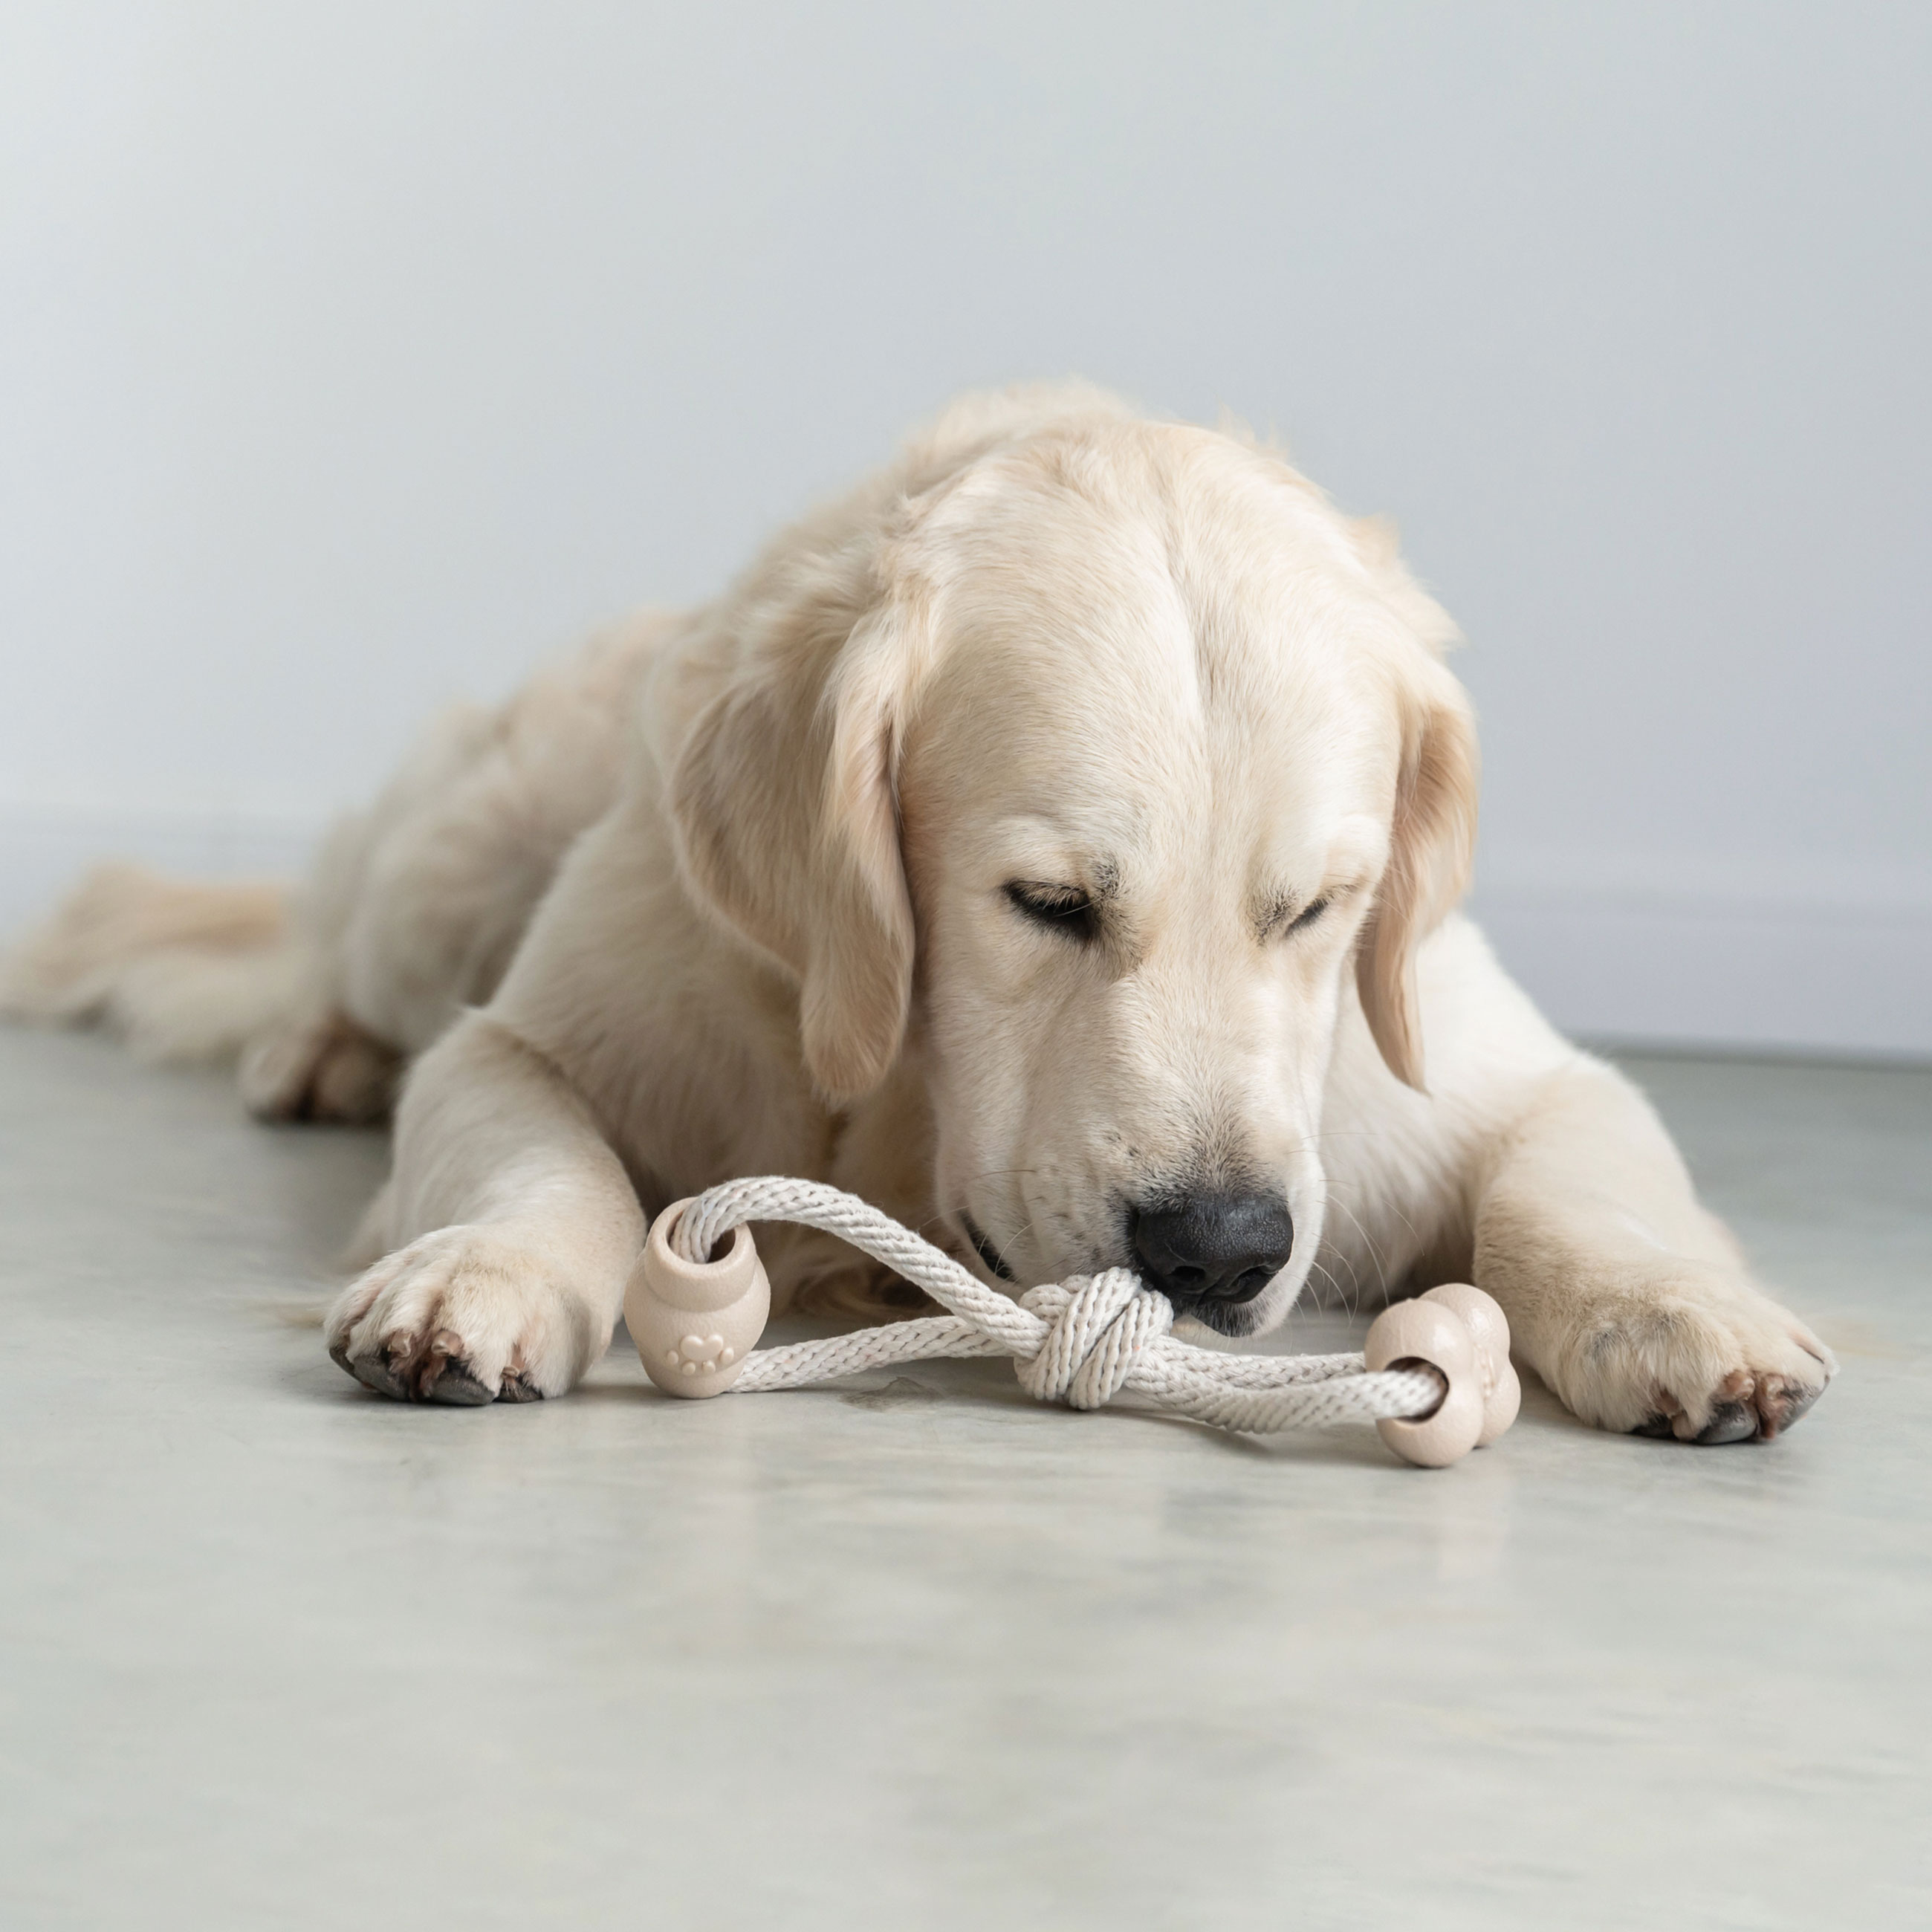 Dog toy, 28 cm, rubber / cotton, Beige, Bone and barrel on rope, Playful pet изображение № 2